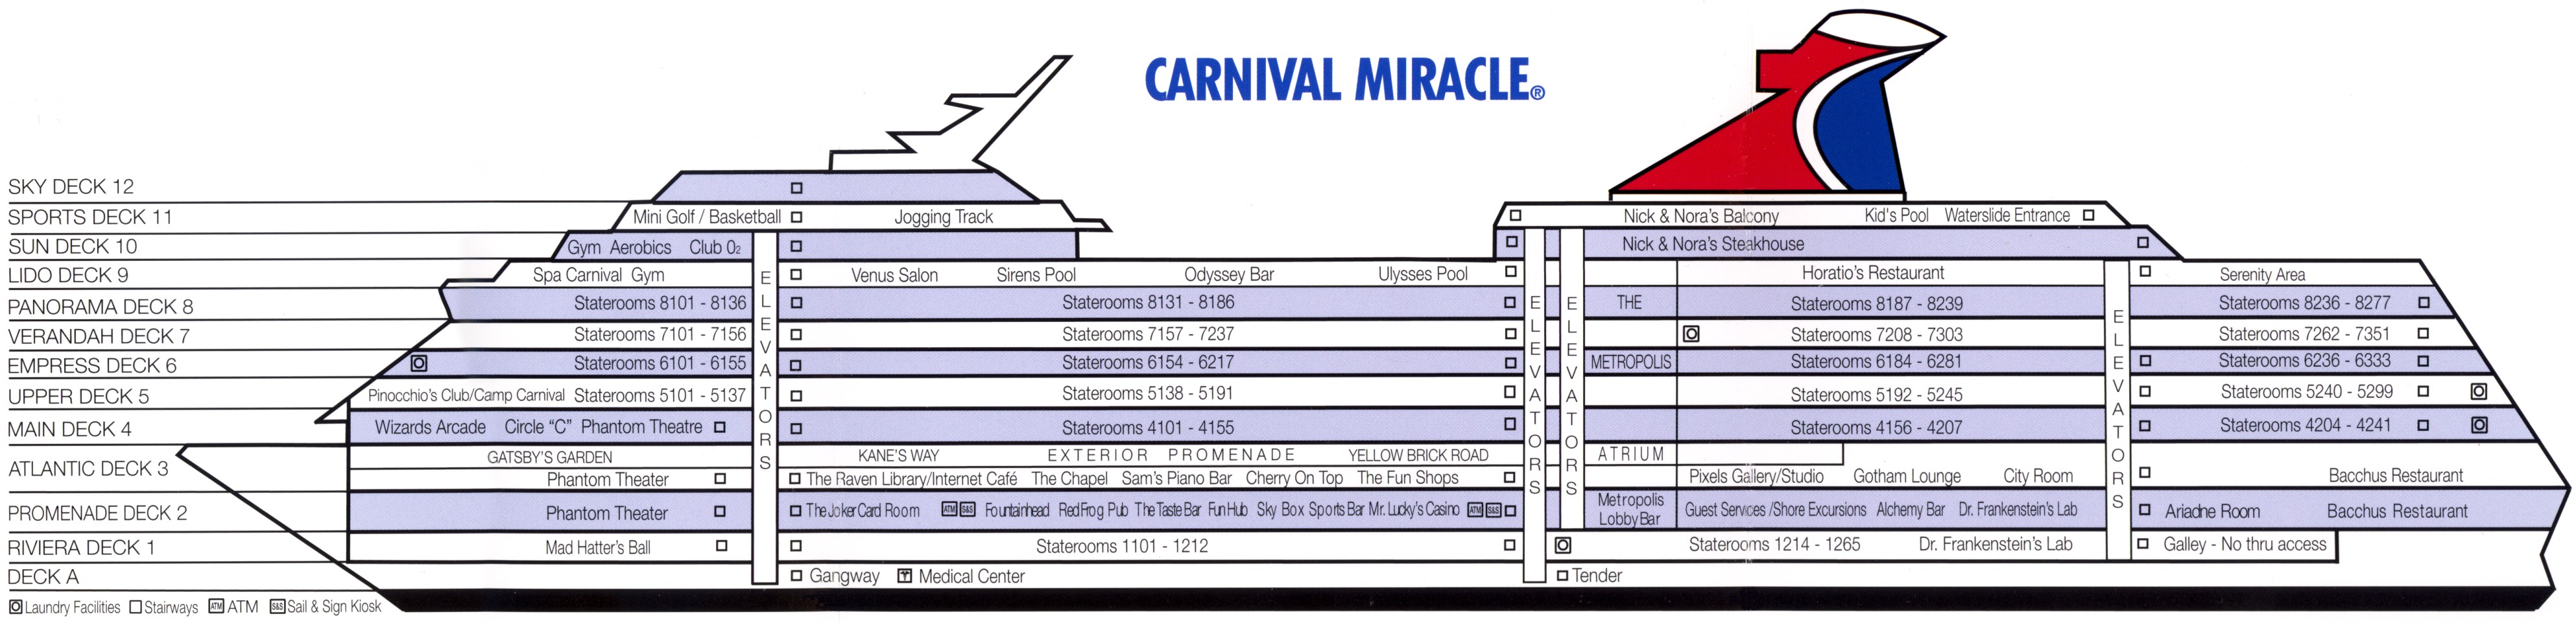 Jim Zim S Carnival Miracle Cruise Ship Review